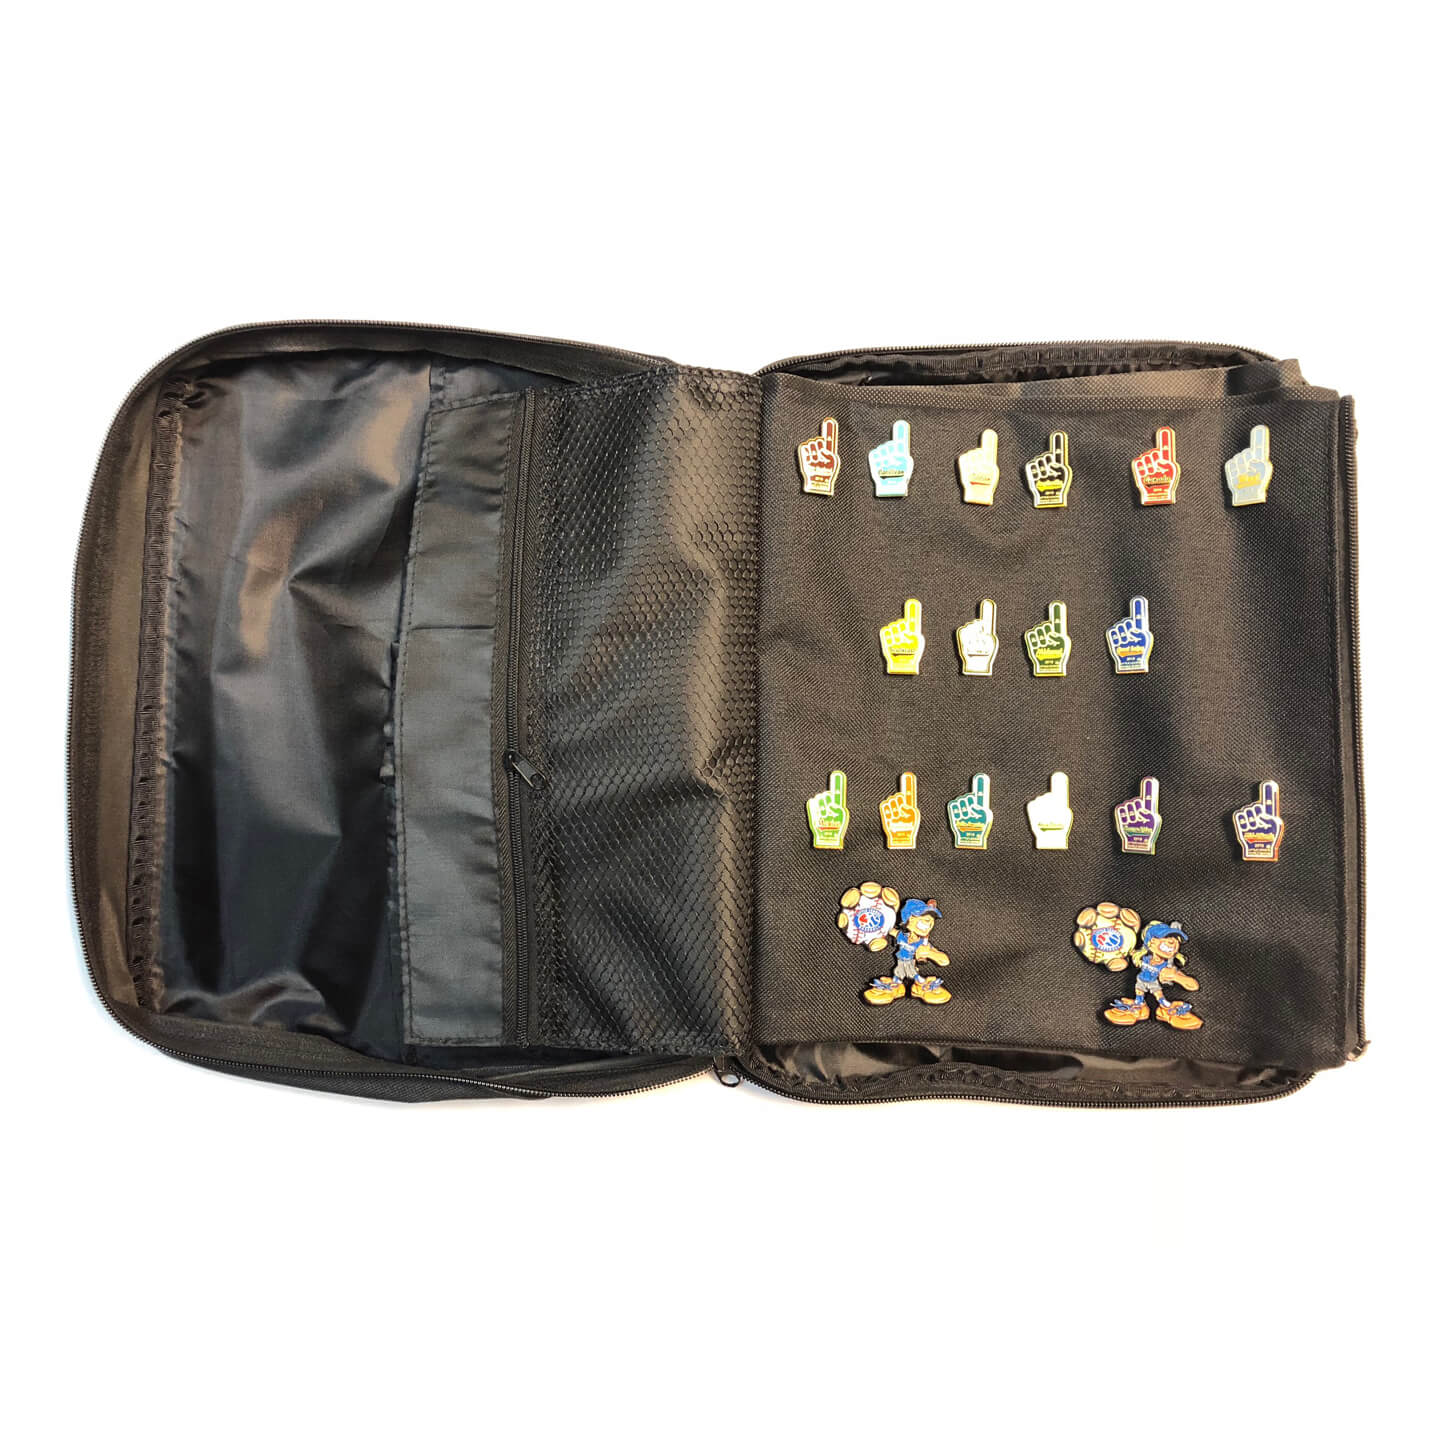 Pin Bag Cases | GH Pins